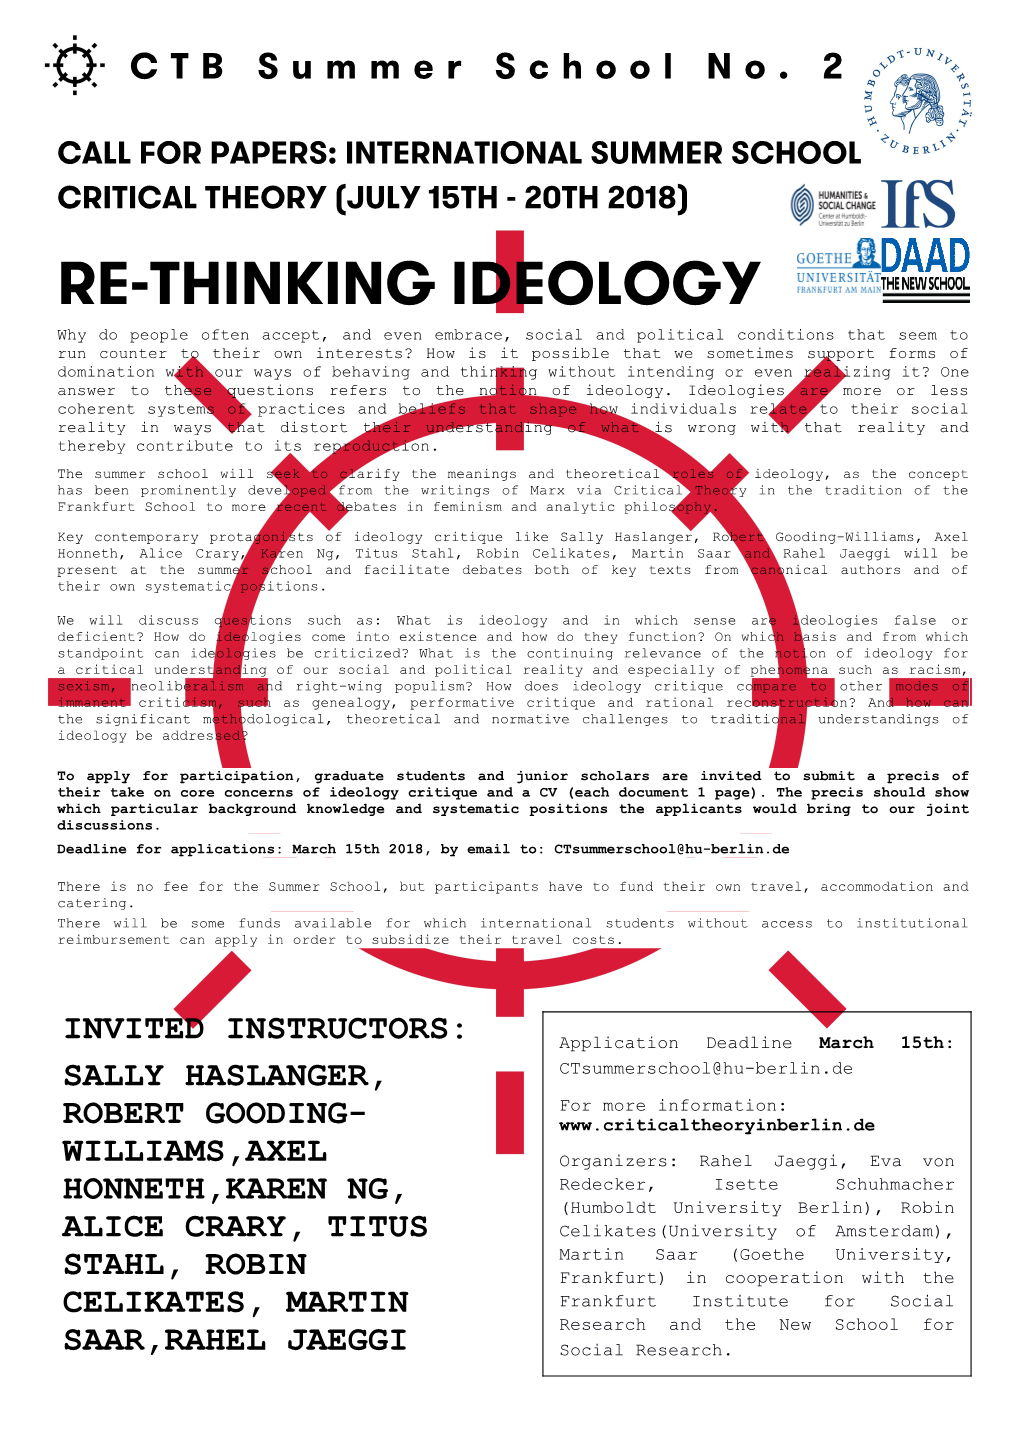 Re-Thinking Ideology